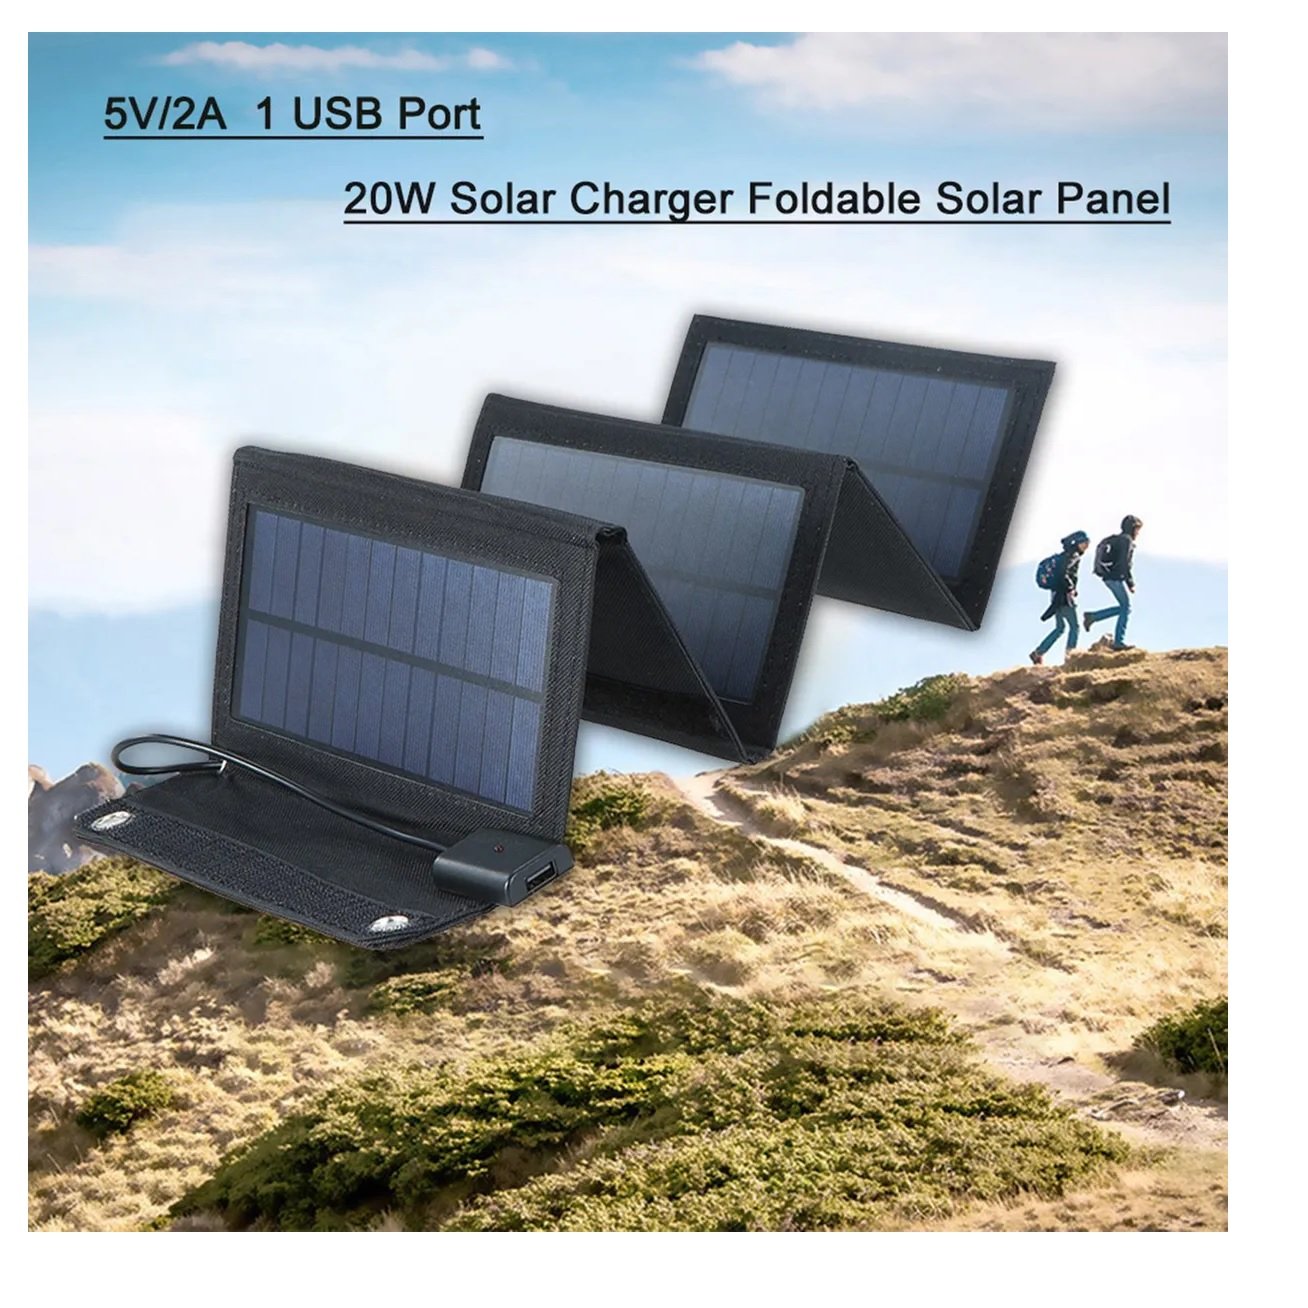 Cargador solar plegable 5V/20W para dispositivos USB móviles